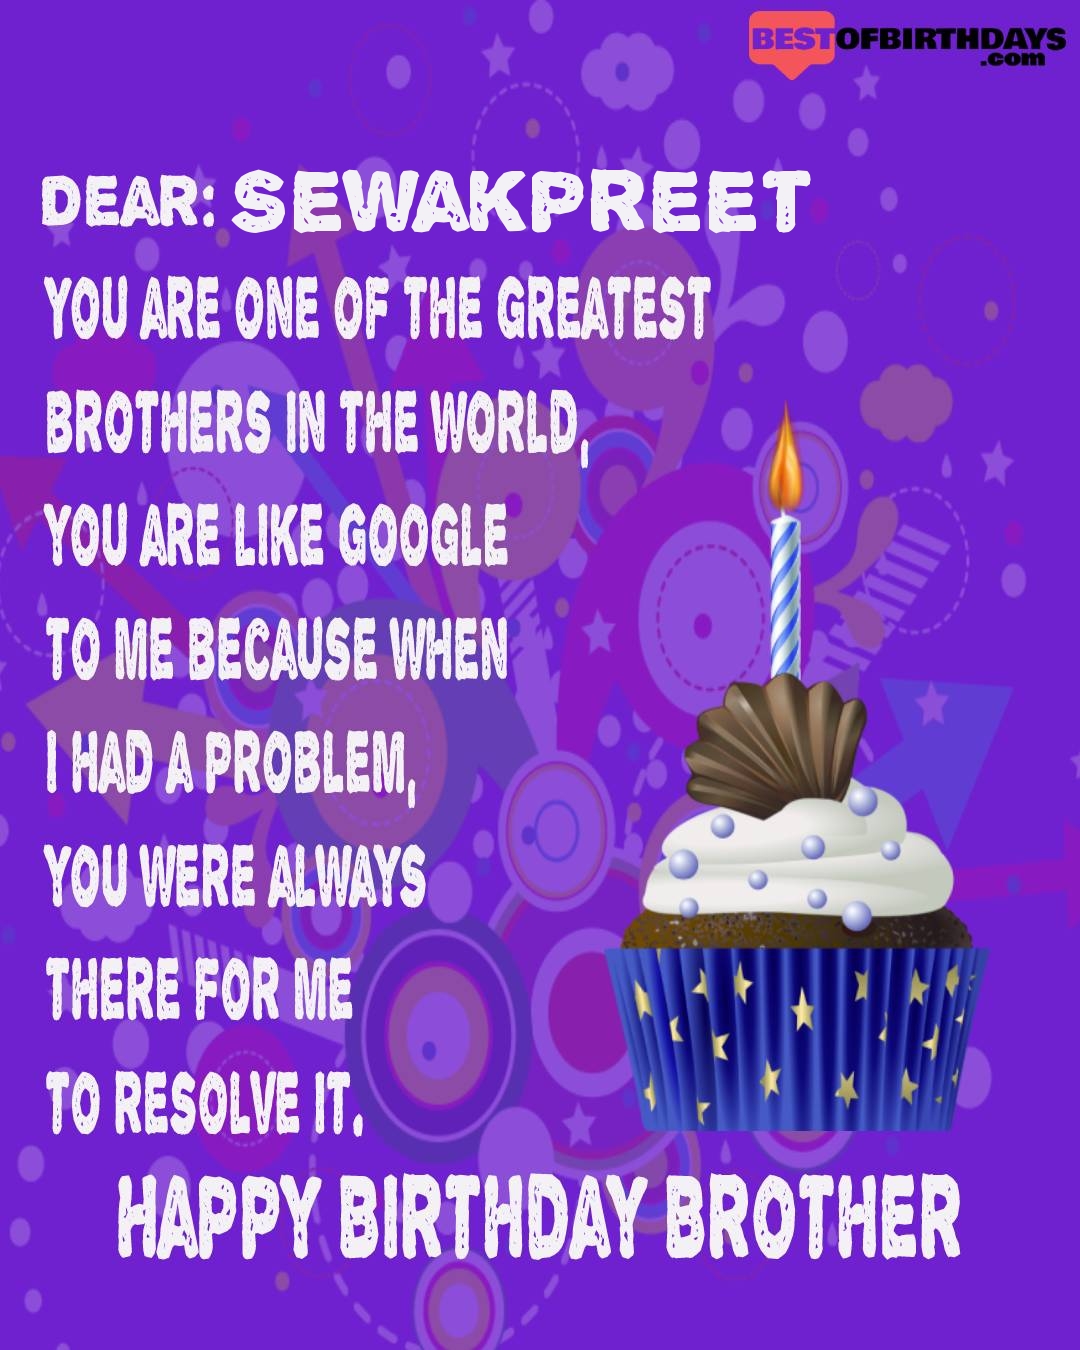 Happy birthday sewakpreet bhai brother bro